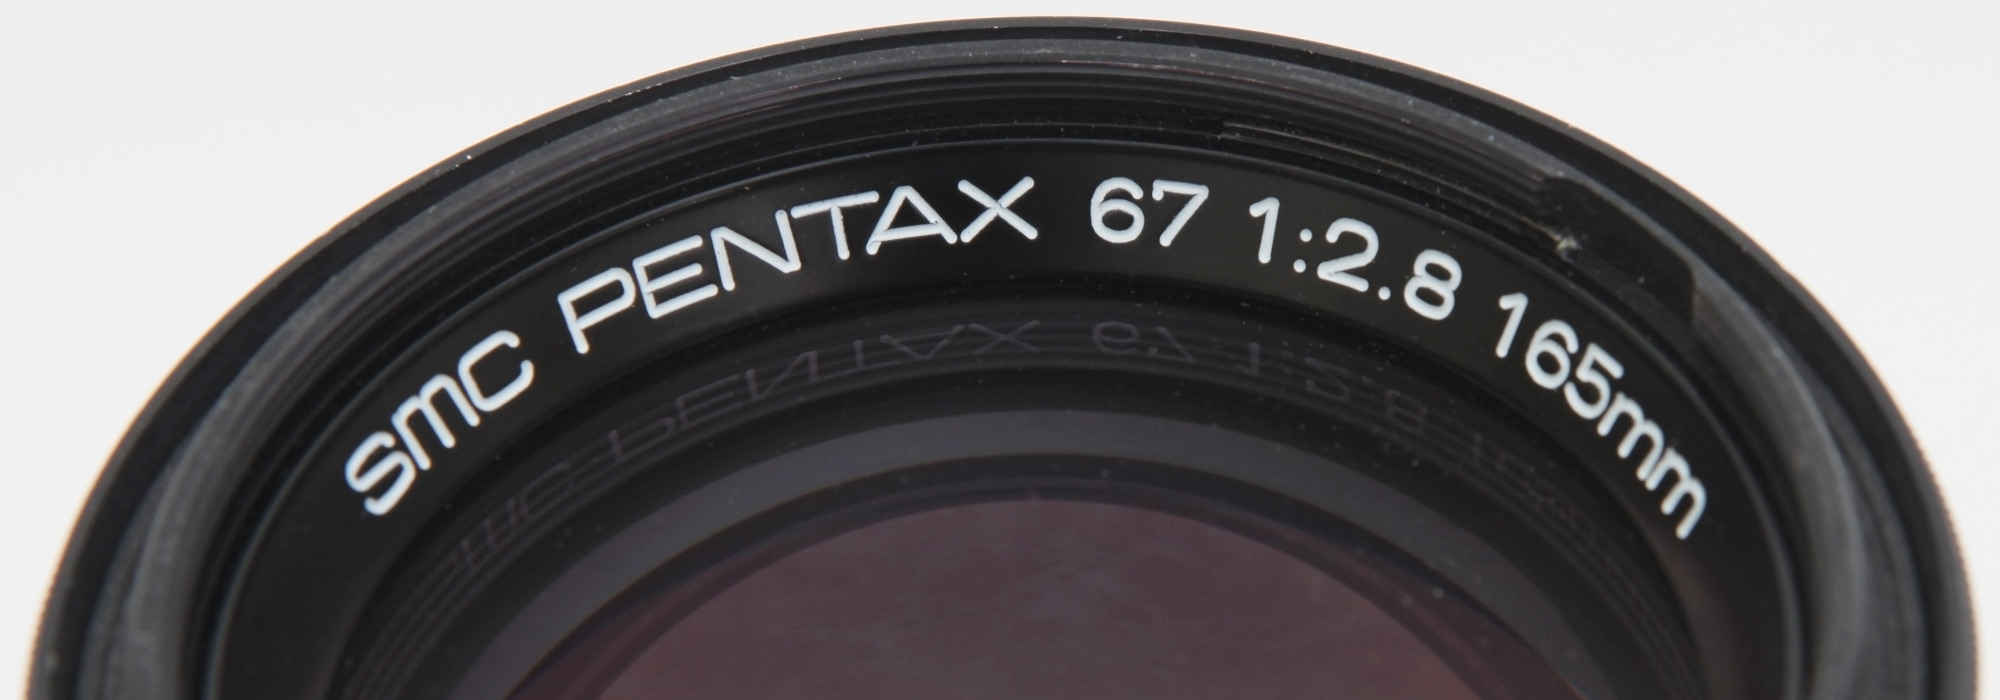 SMC PENTAX 67 165mm F2.8 © Sasha Krasnov Photography